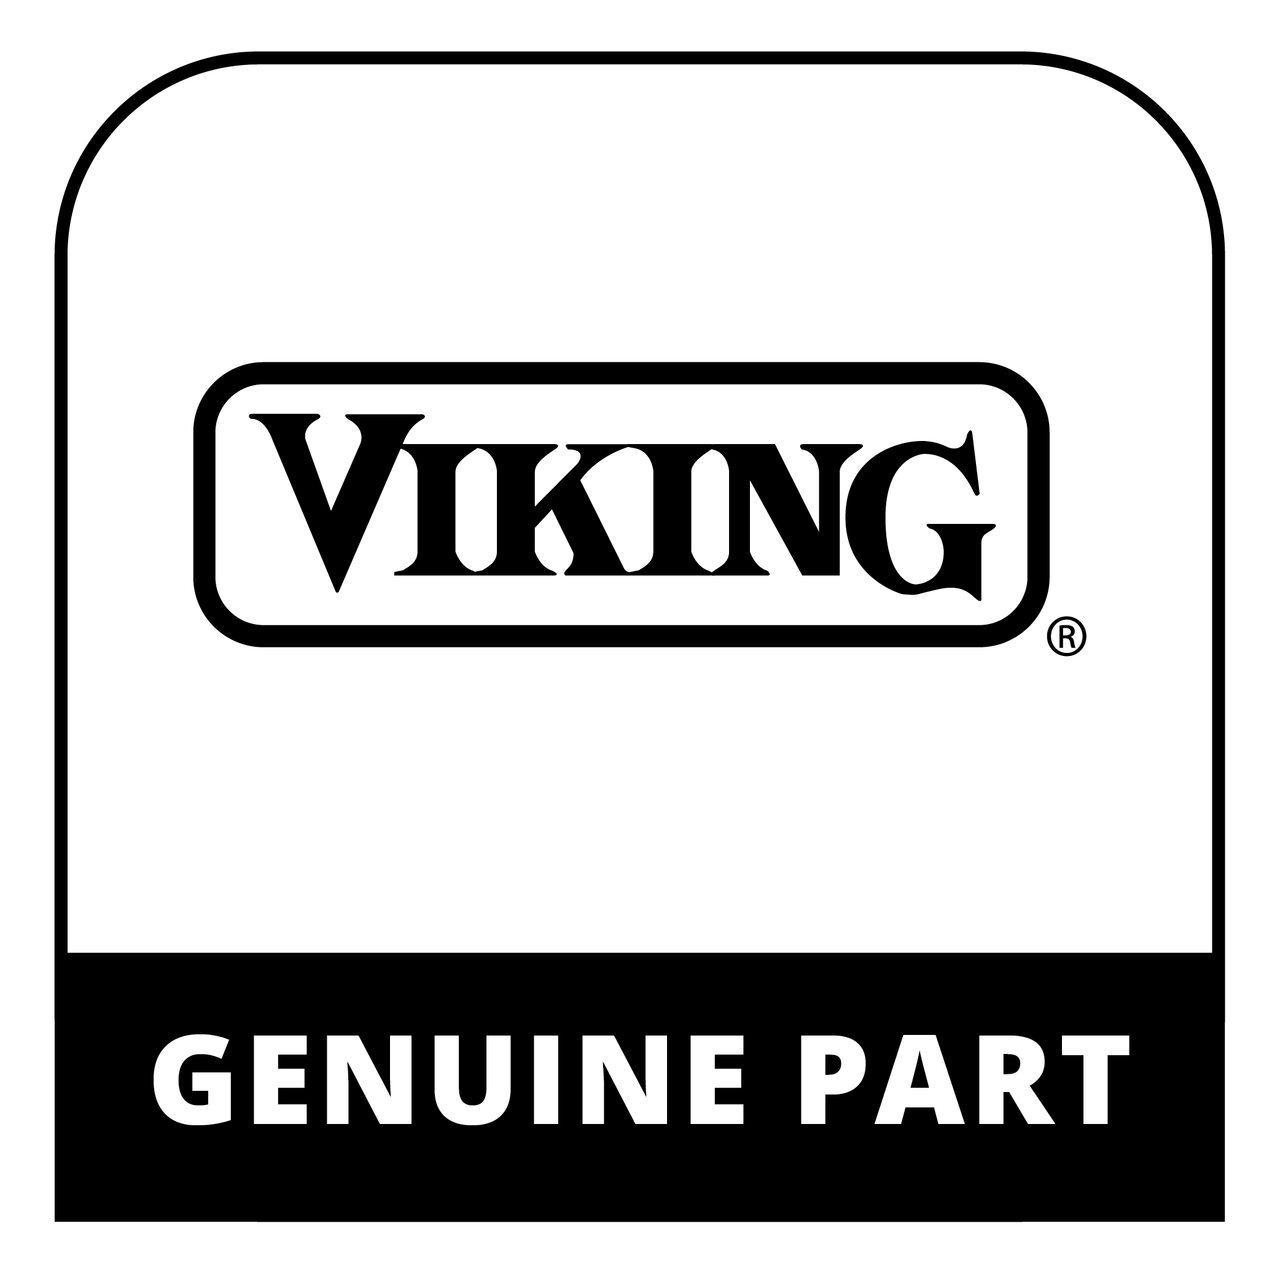 Viking 055480-2609 - PANEL, CTRL, VSOF730 W/GRAPHIC - Genuine Viking Part